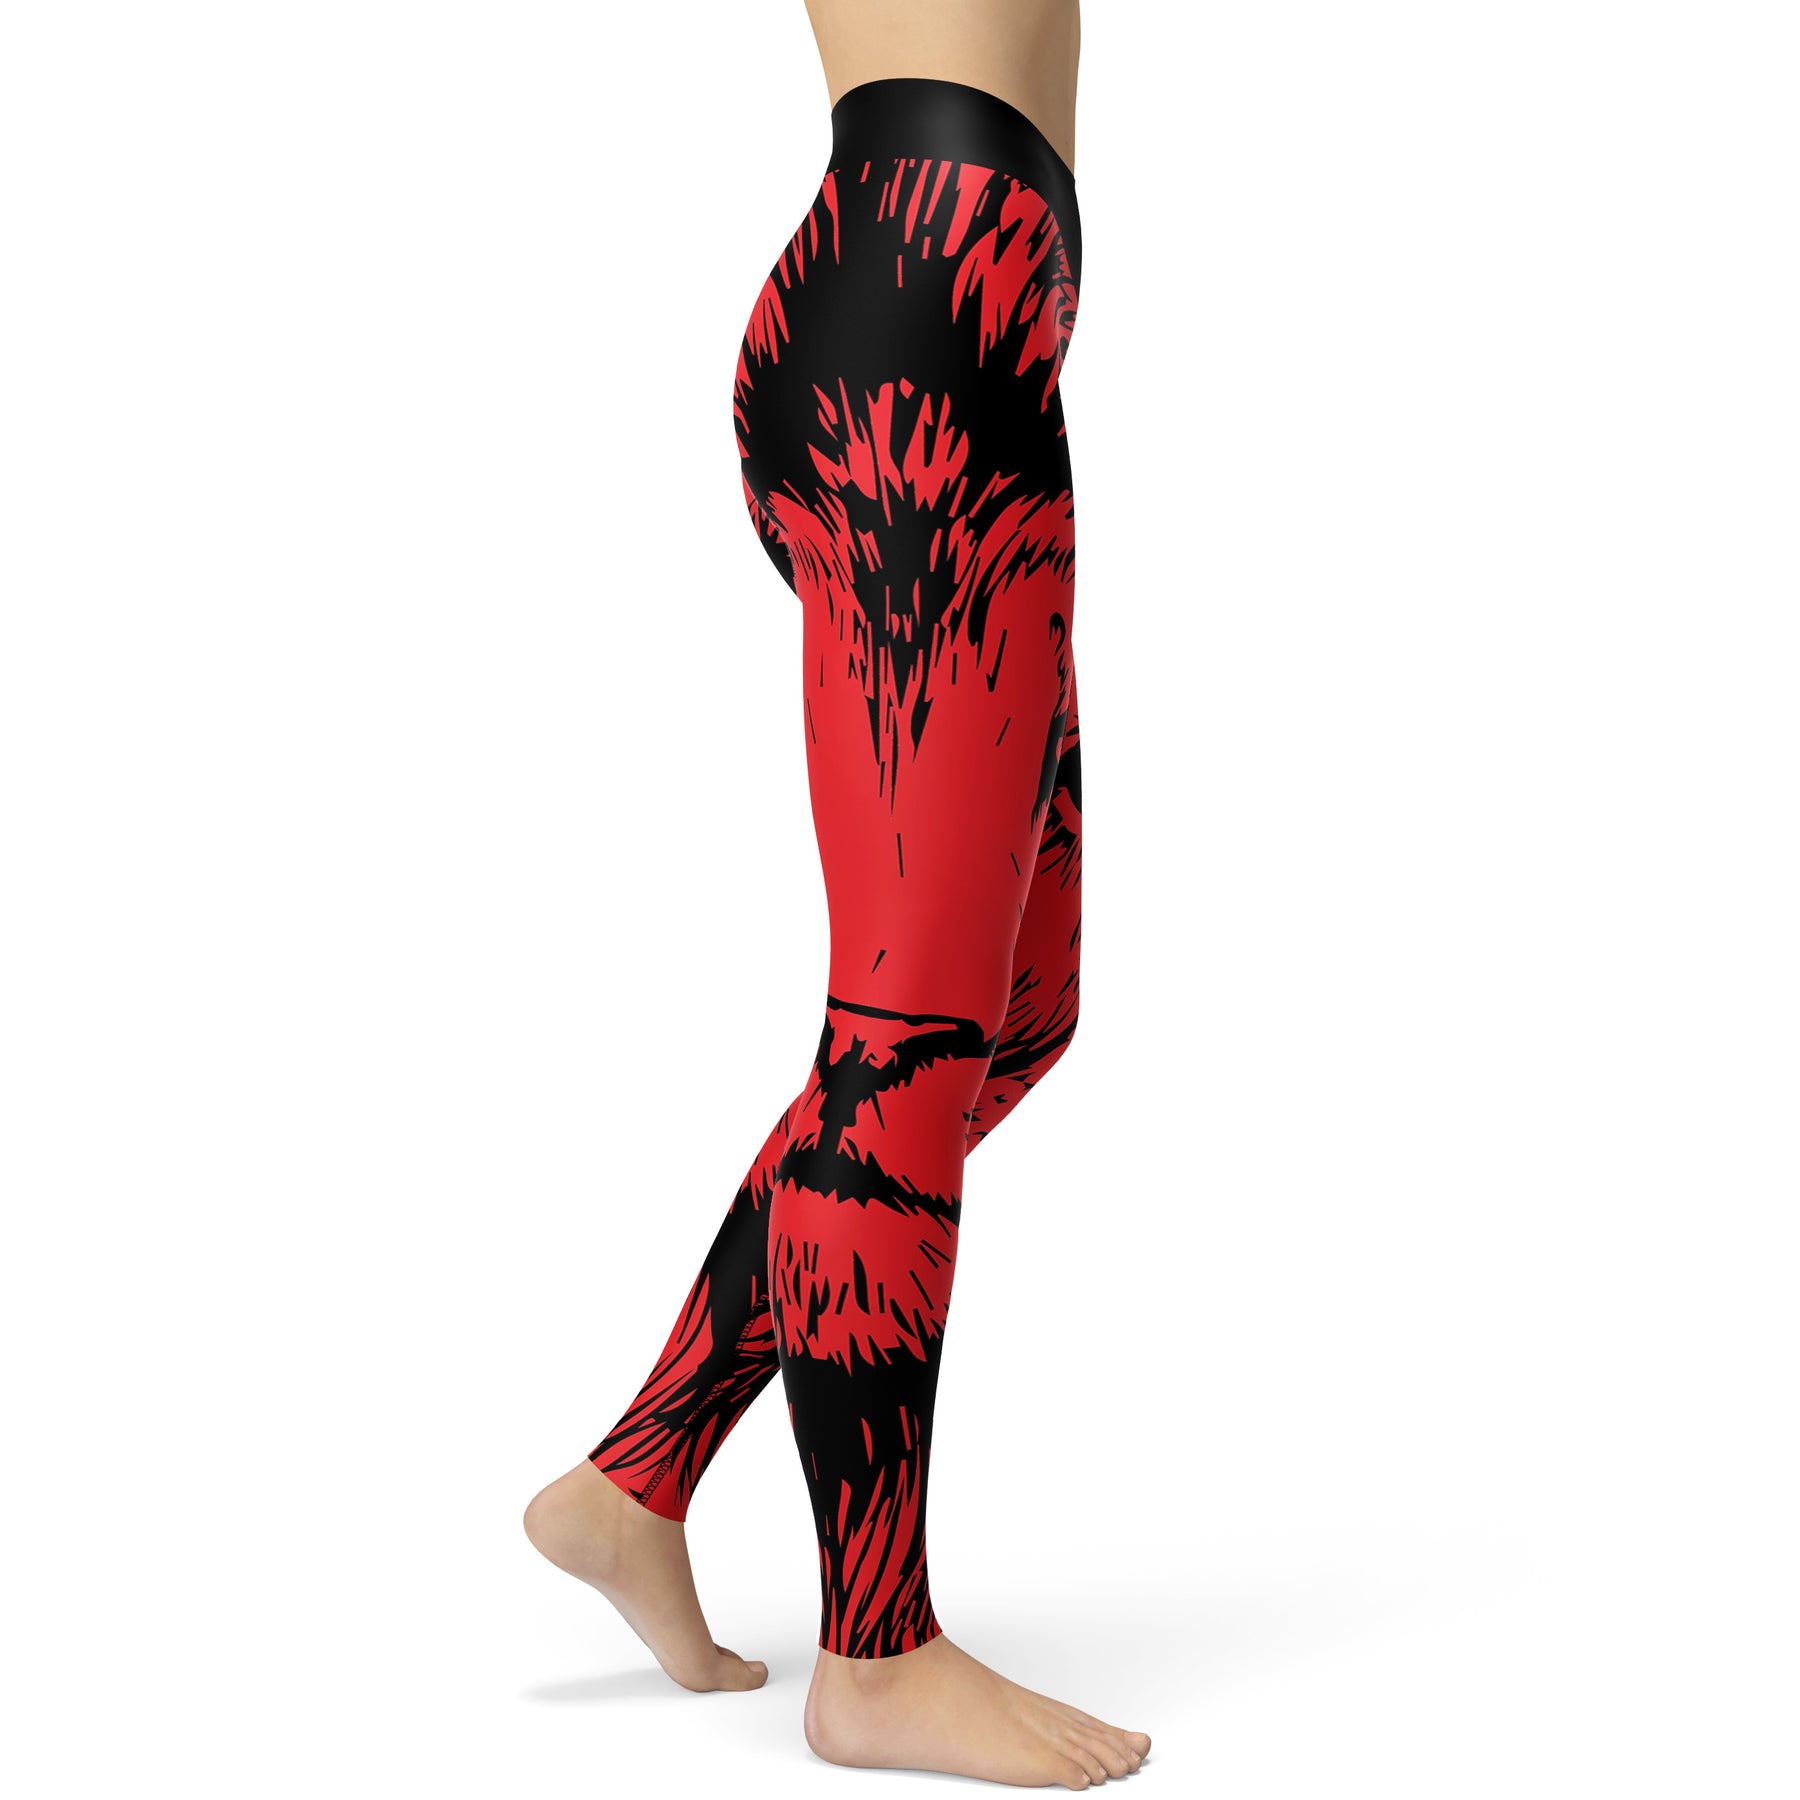 Red Lion Yoga Leggings - Lily Mist